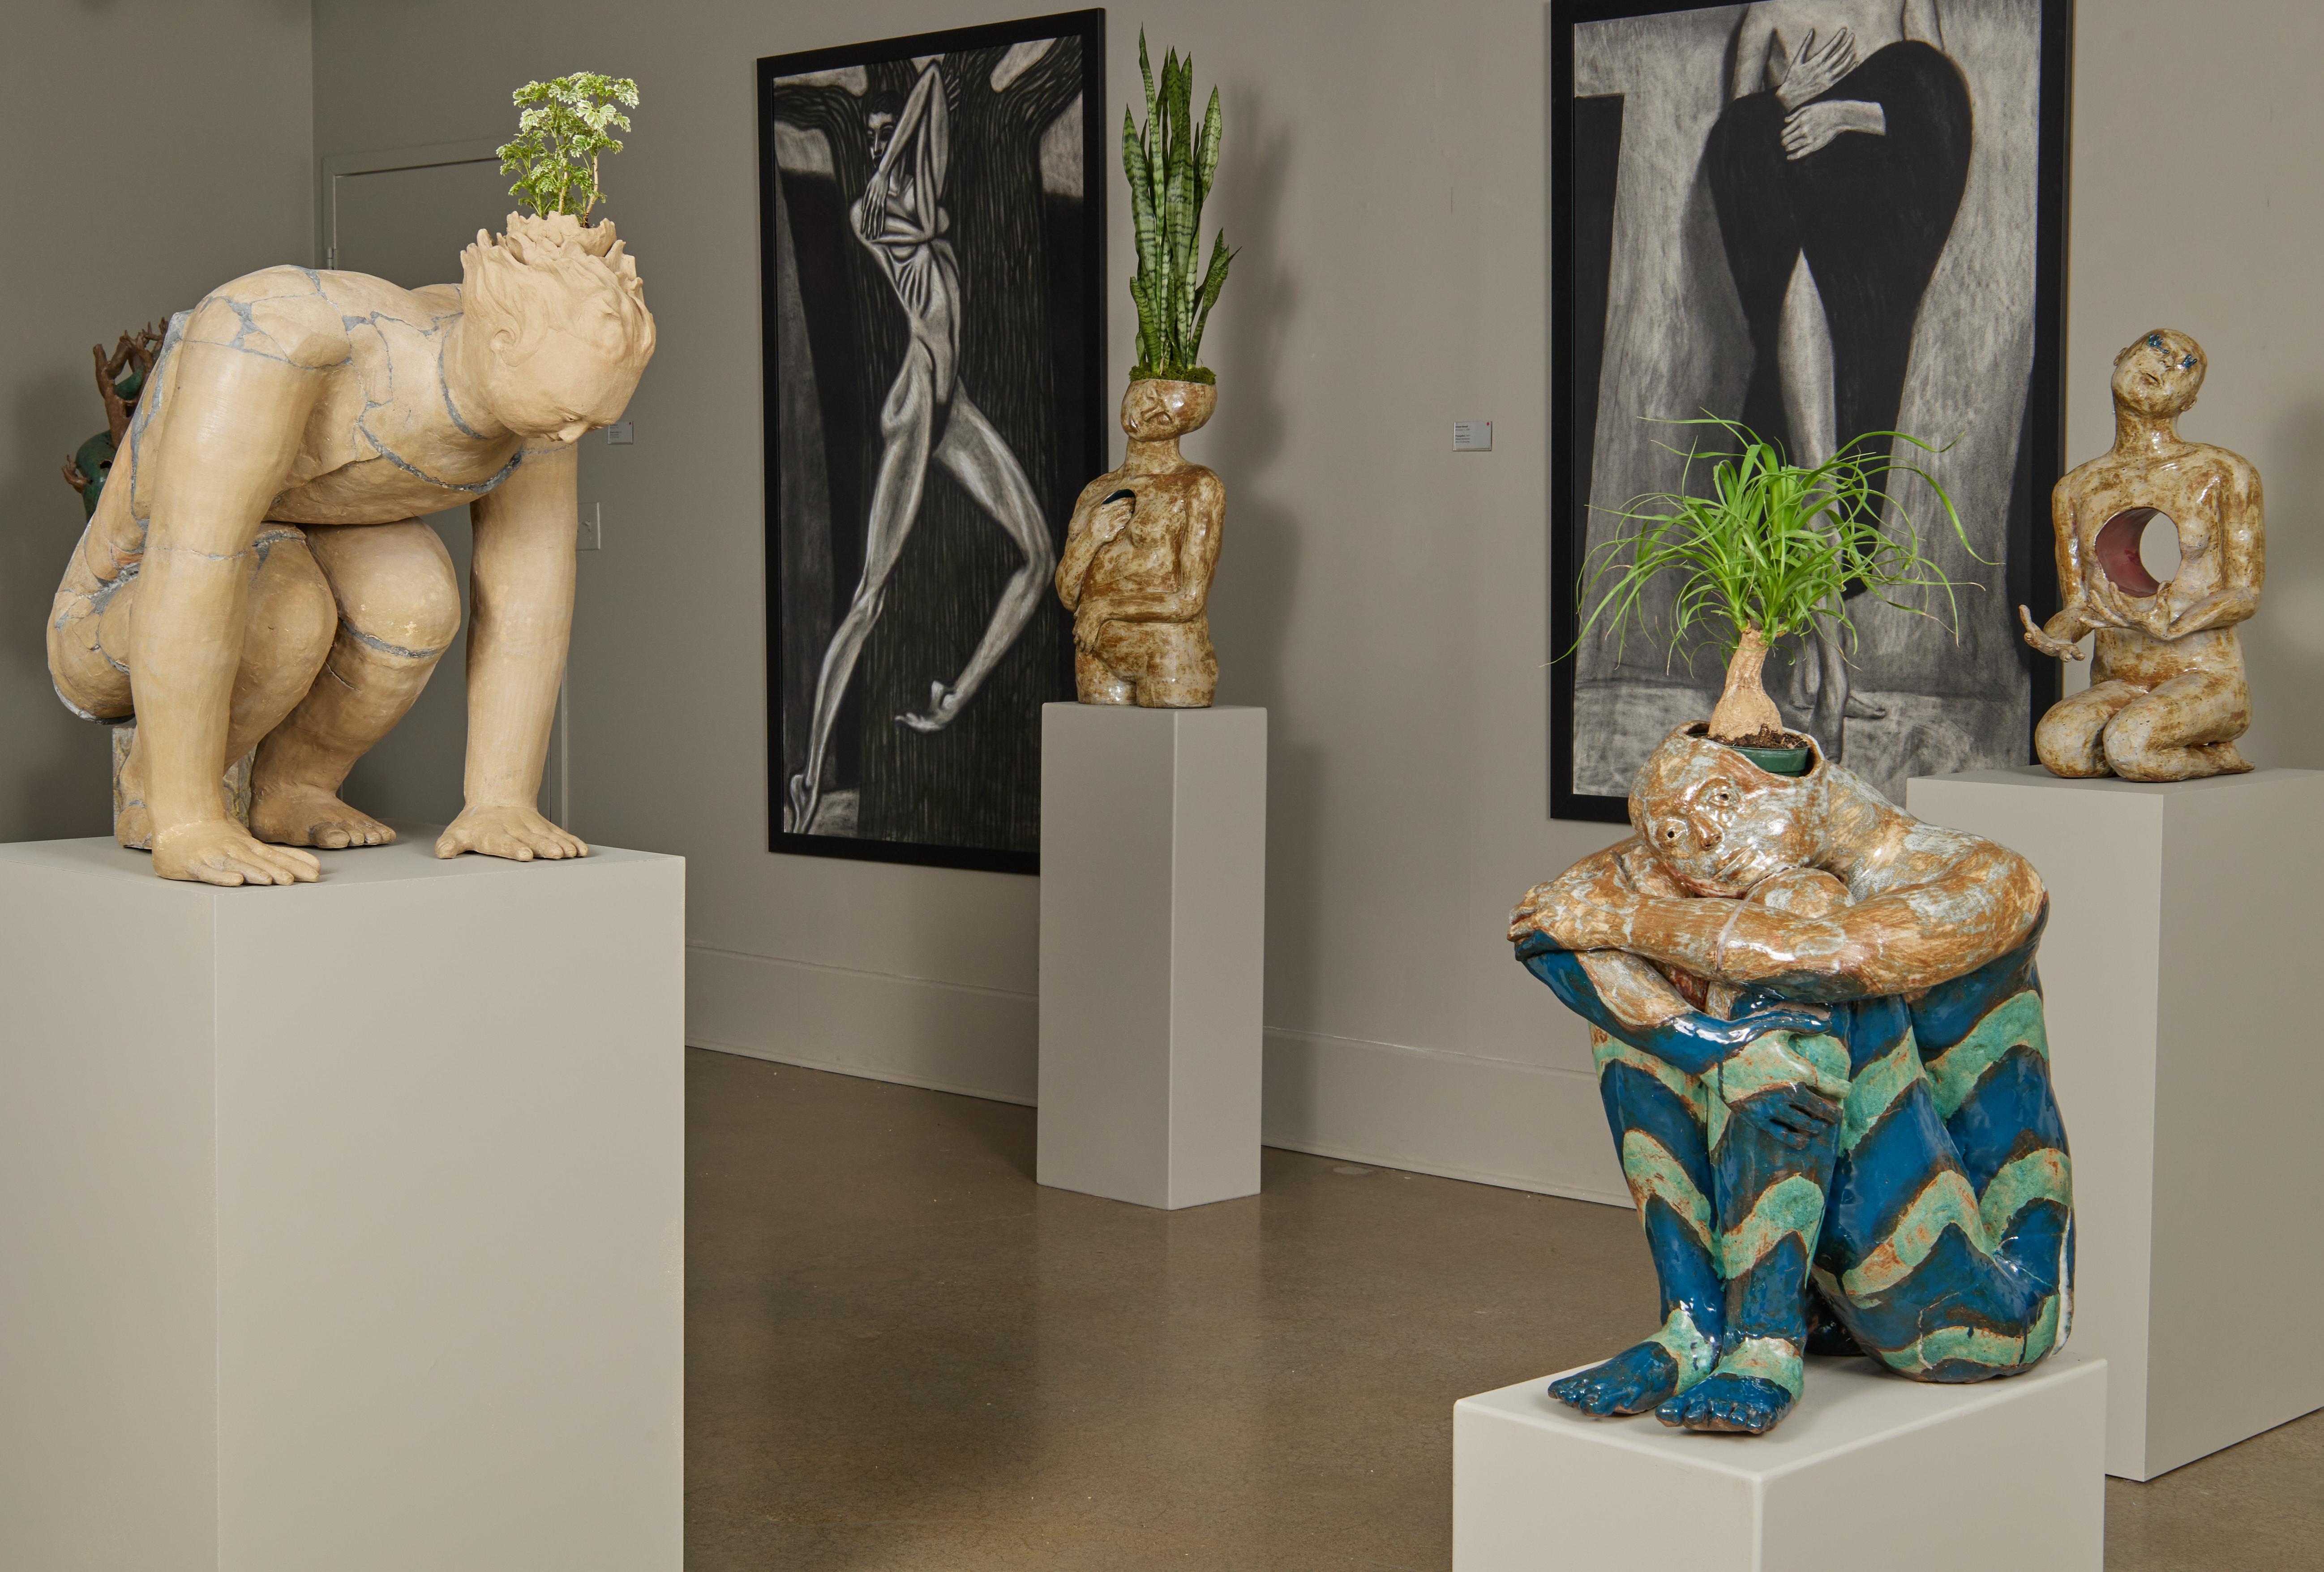 Tempering, 21st Century Contemporary Glazed Ceramic Sculpture, Kneeling Figure - Gray Figurative Sculpture by Kristen Newell